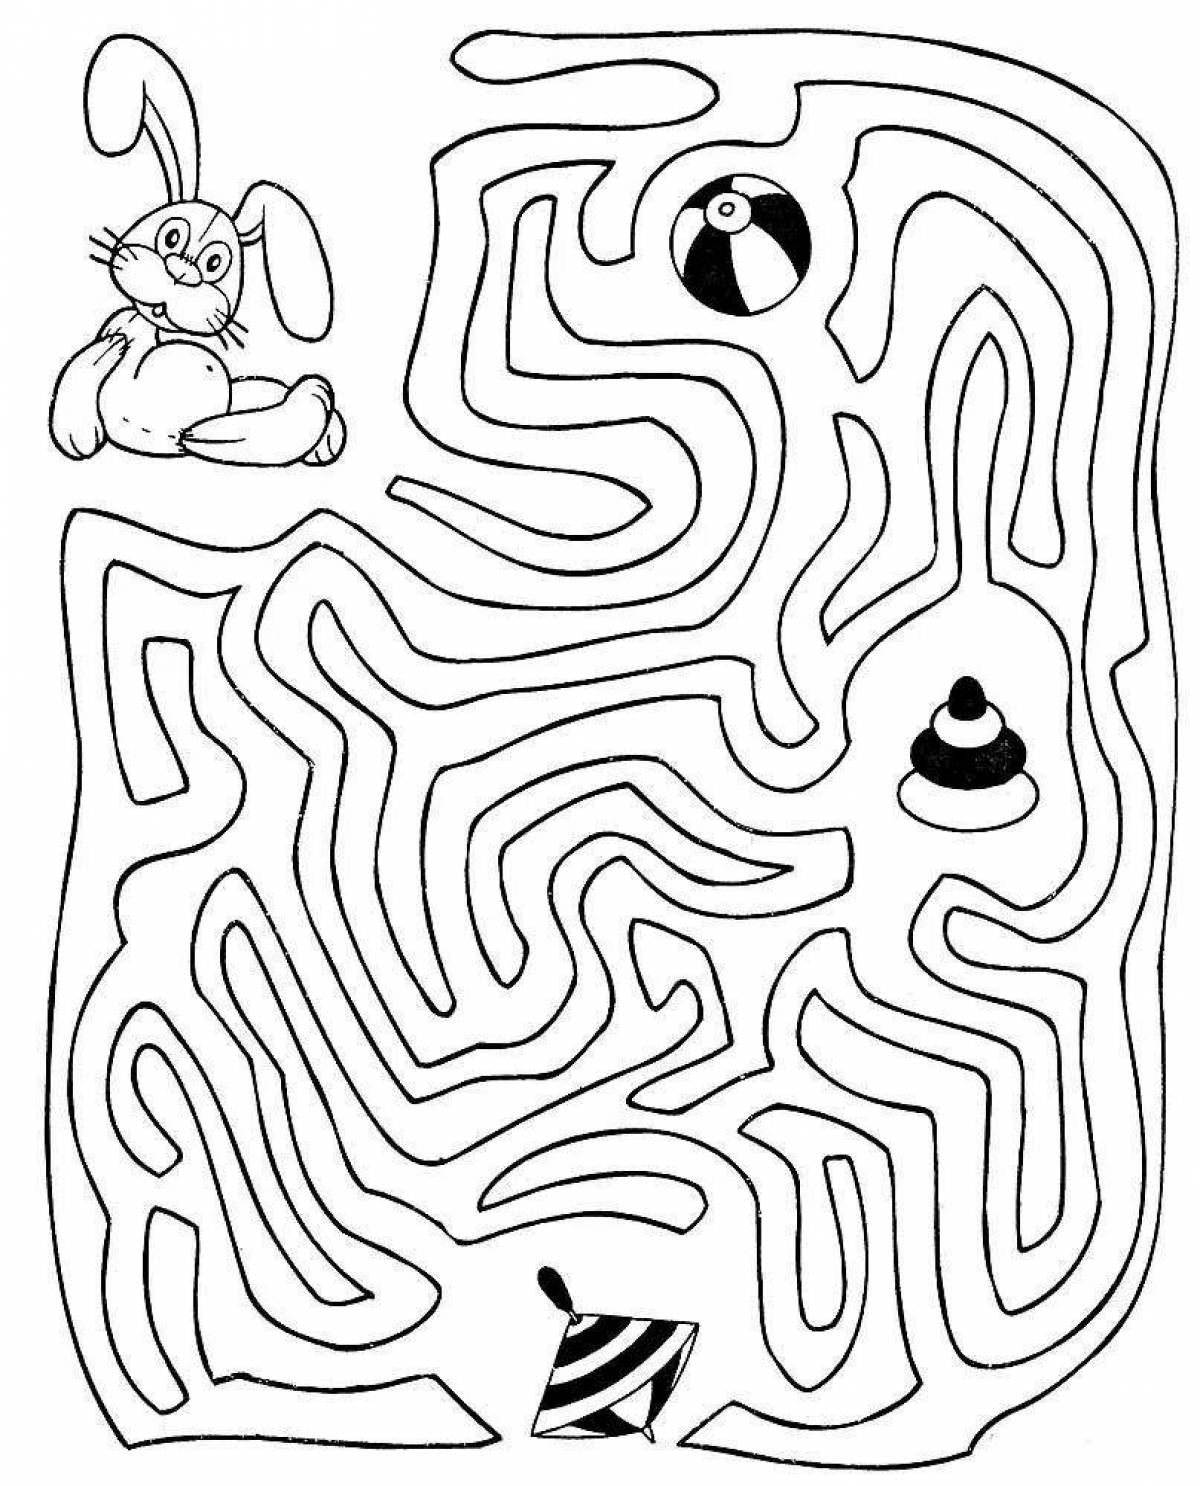 Maze for kids #1